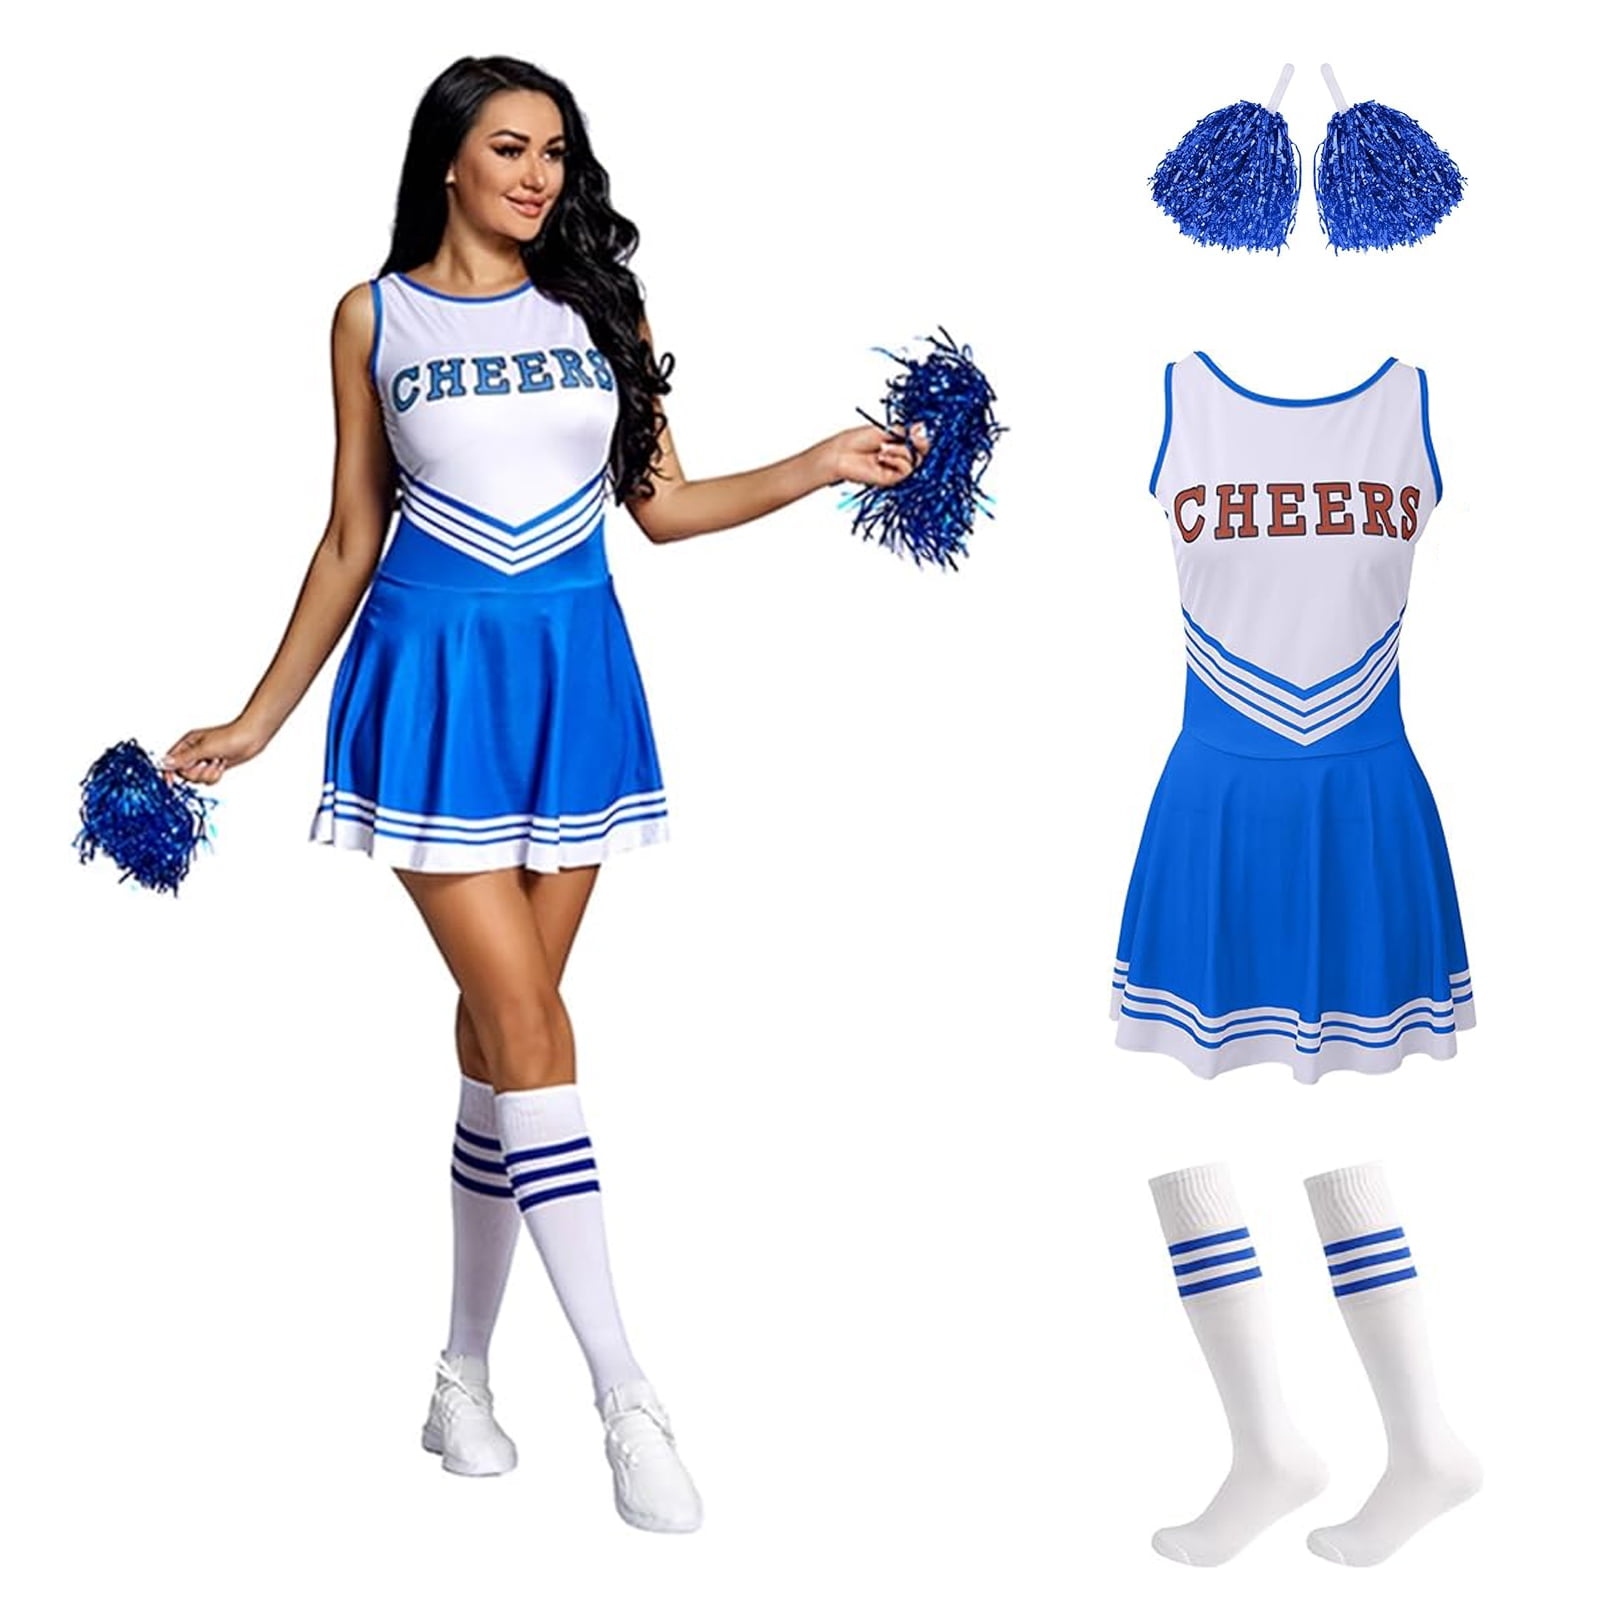 Crowdstage Women S School Musical Party Halloween Cheerleader Costume Fancy Dress Uniform Outfit